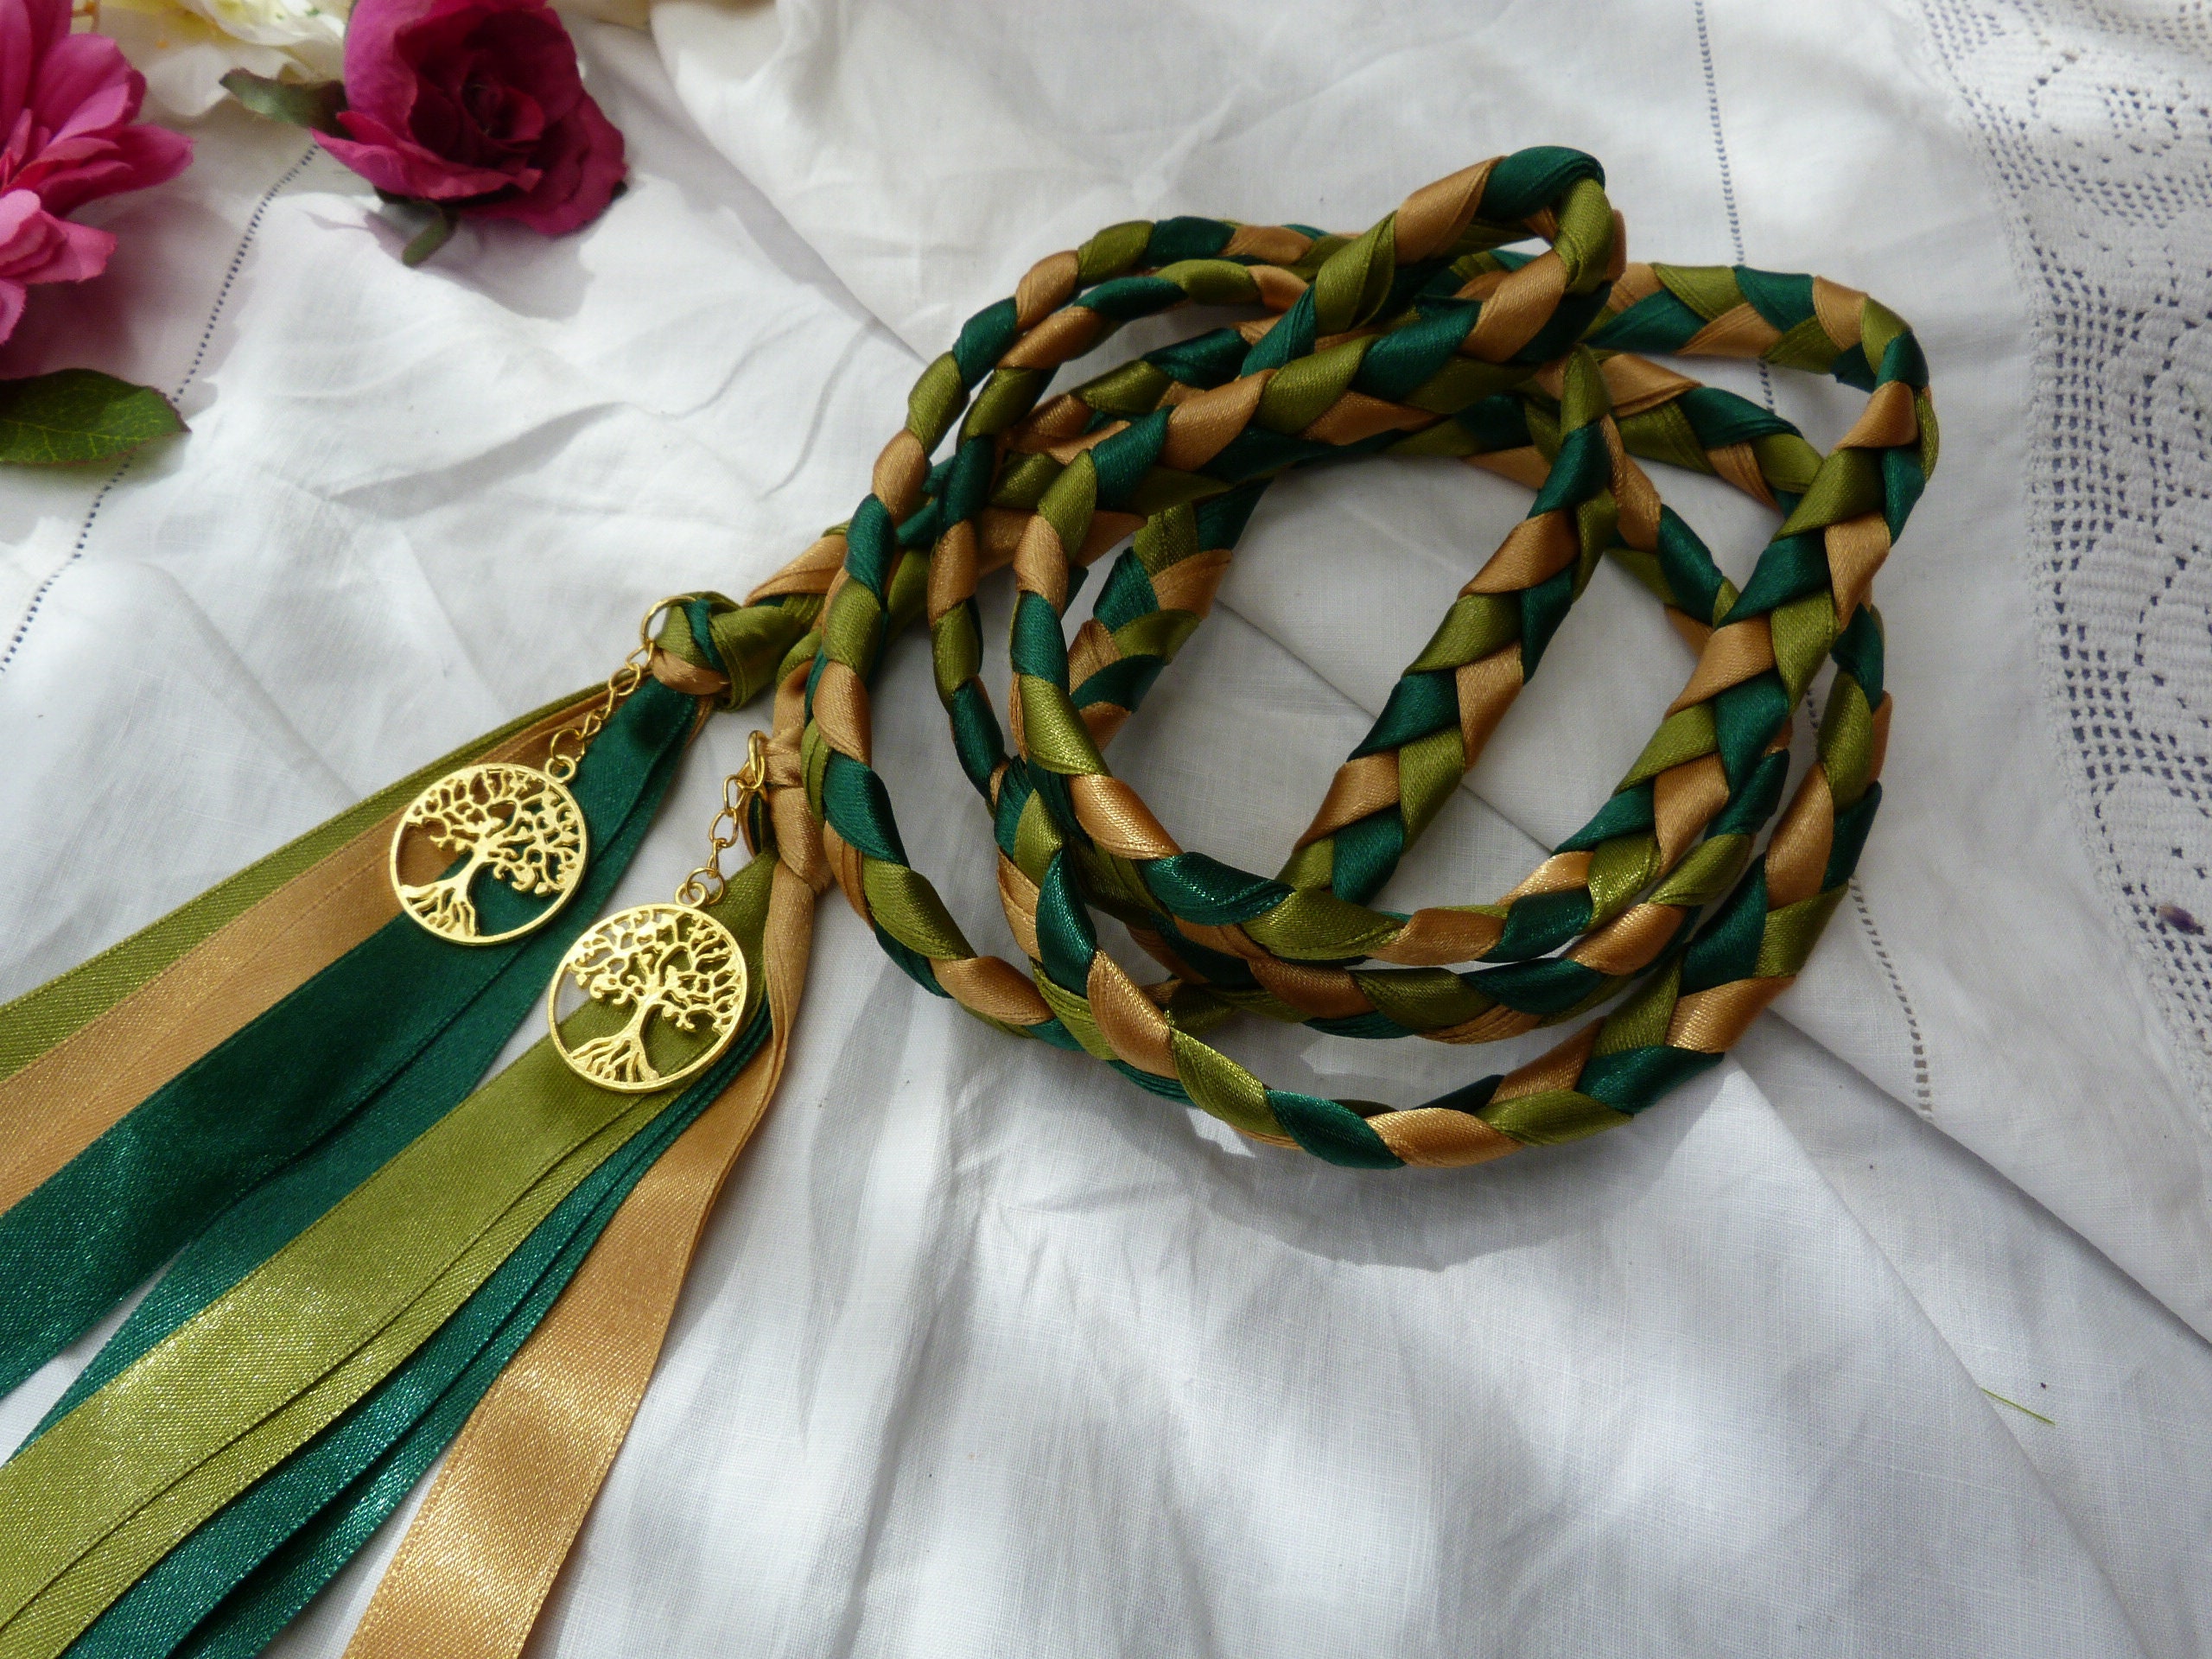 Beadsnice Wedding Handfasting Cord Elegant Braided Ribbon